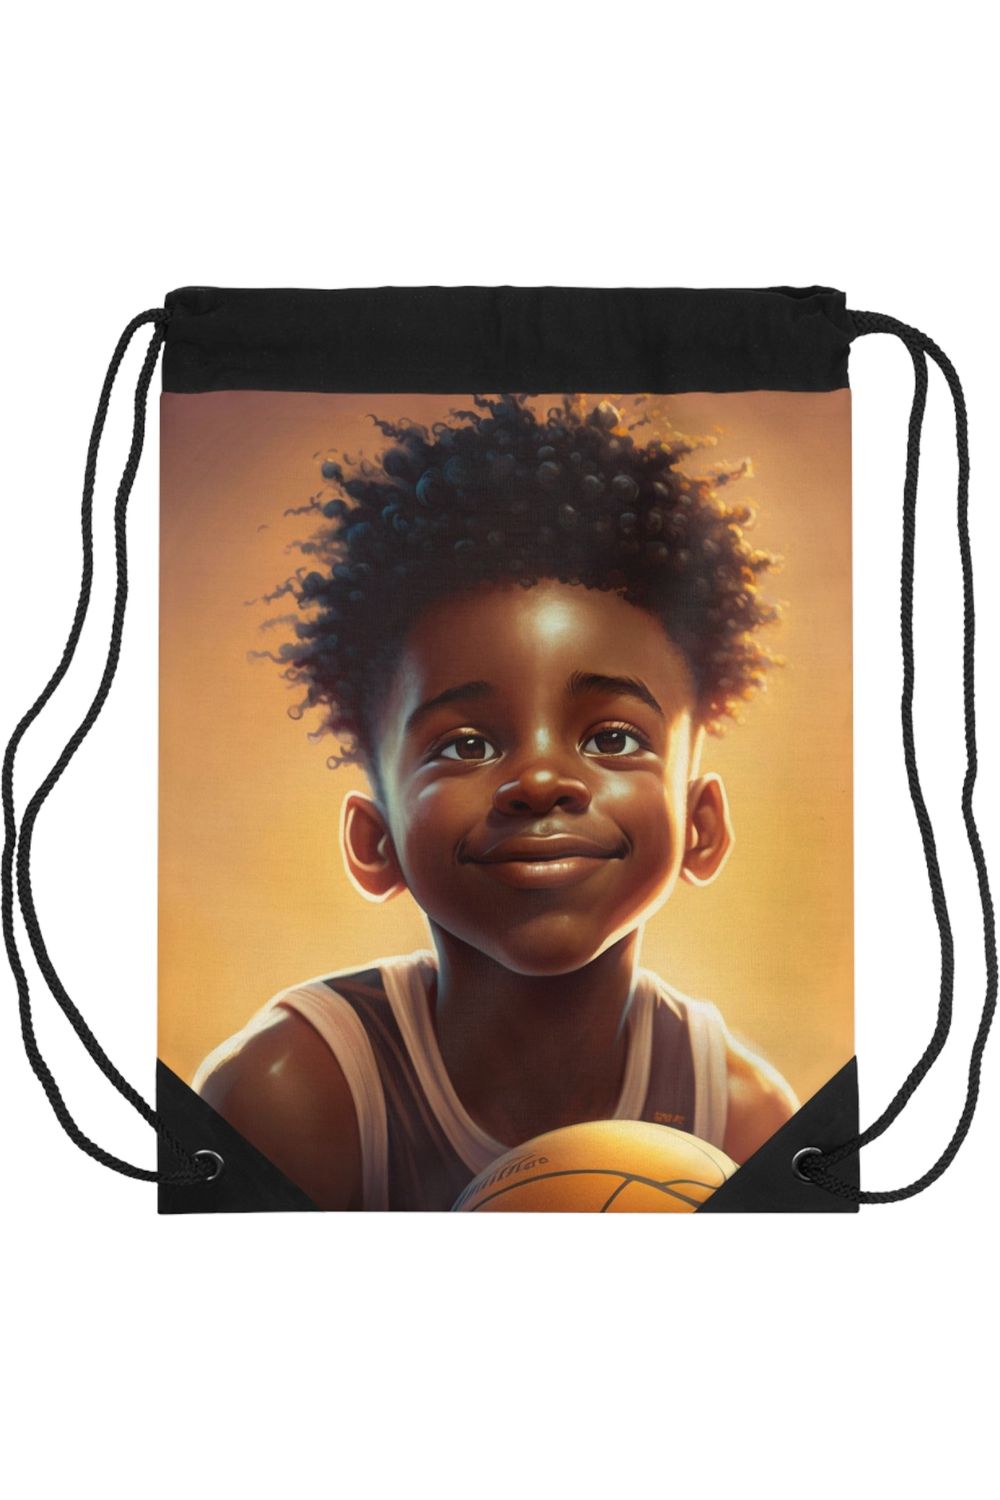 African American Boy with Basketball Drawstring Bag - NicholesGifts.online